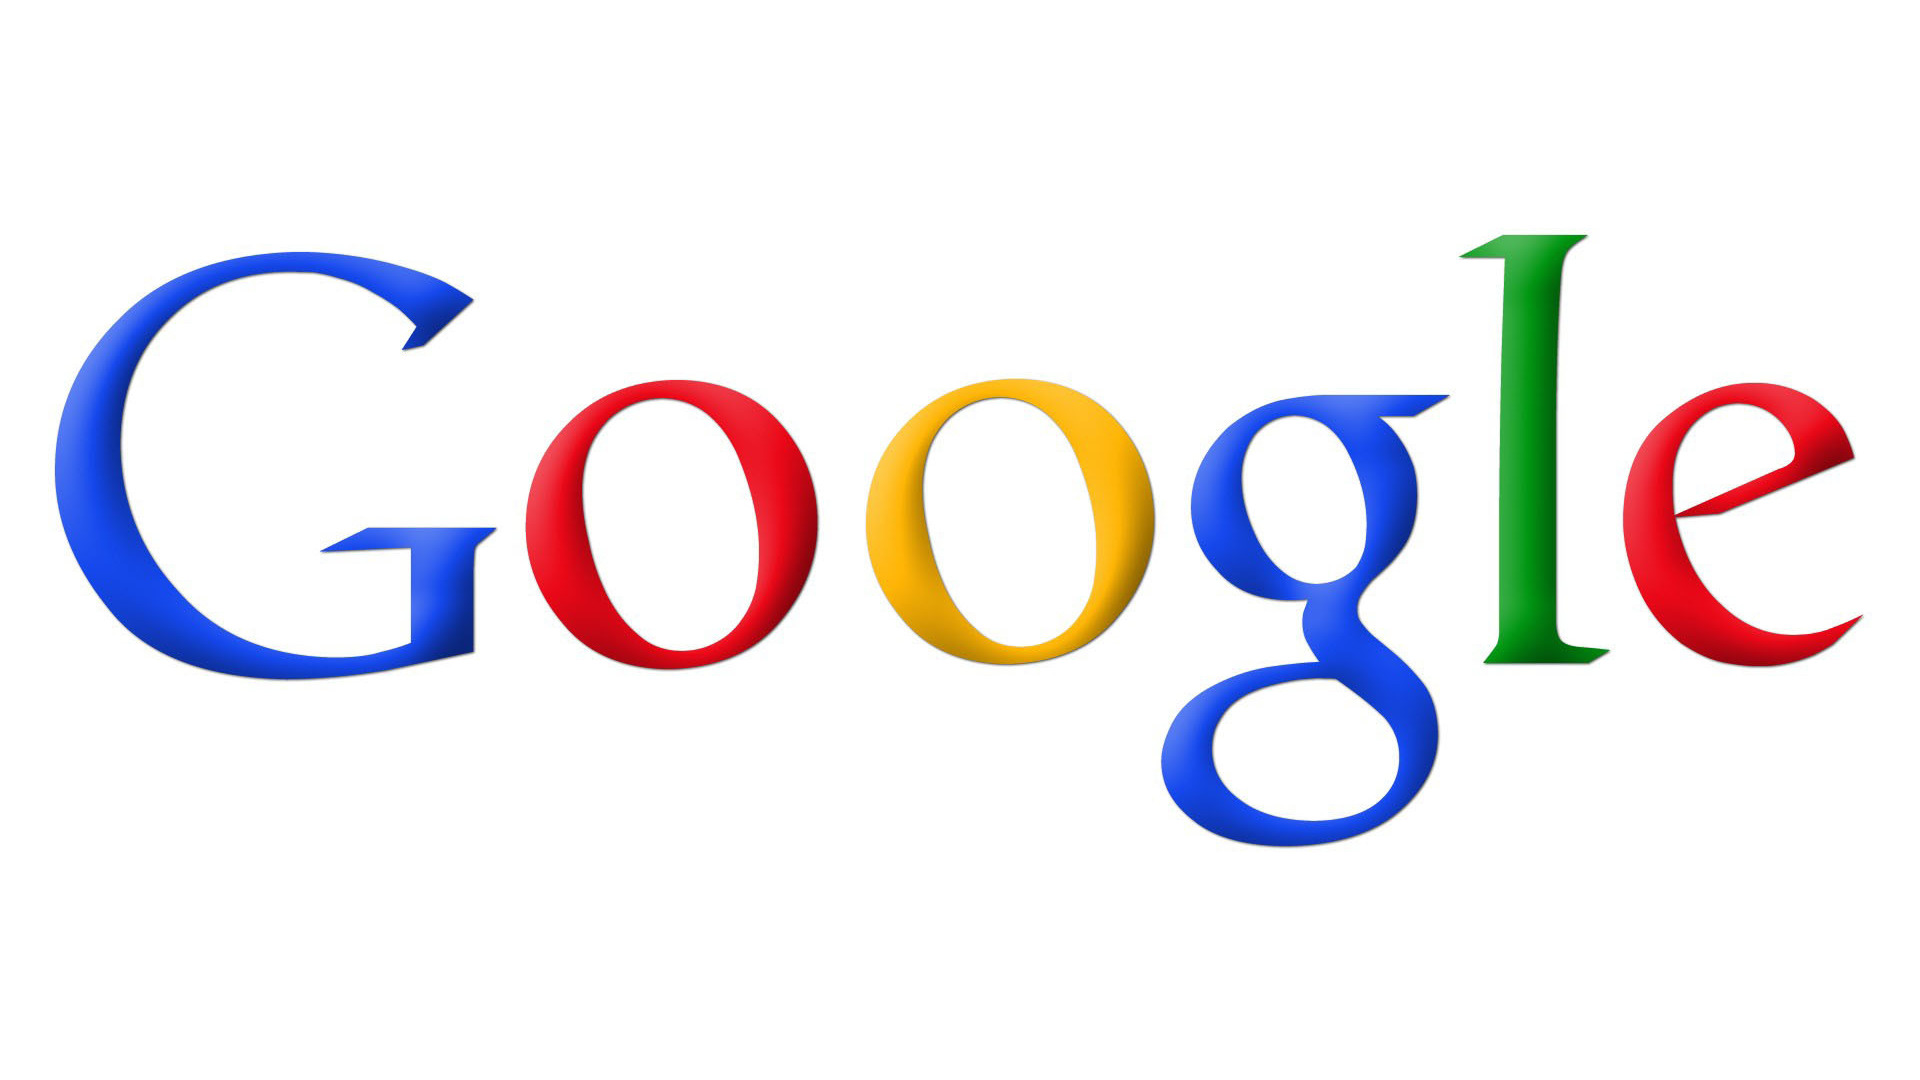 Www google ru. Google checkout. Google новости logo. Google новости логотип PNG. Платежная система Великобритании Google checkout.